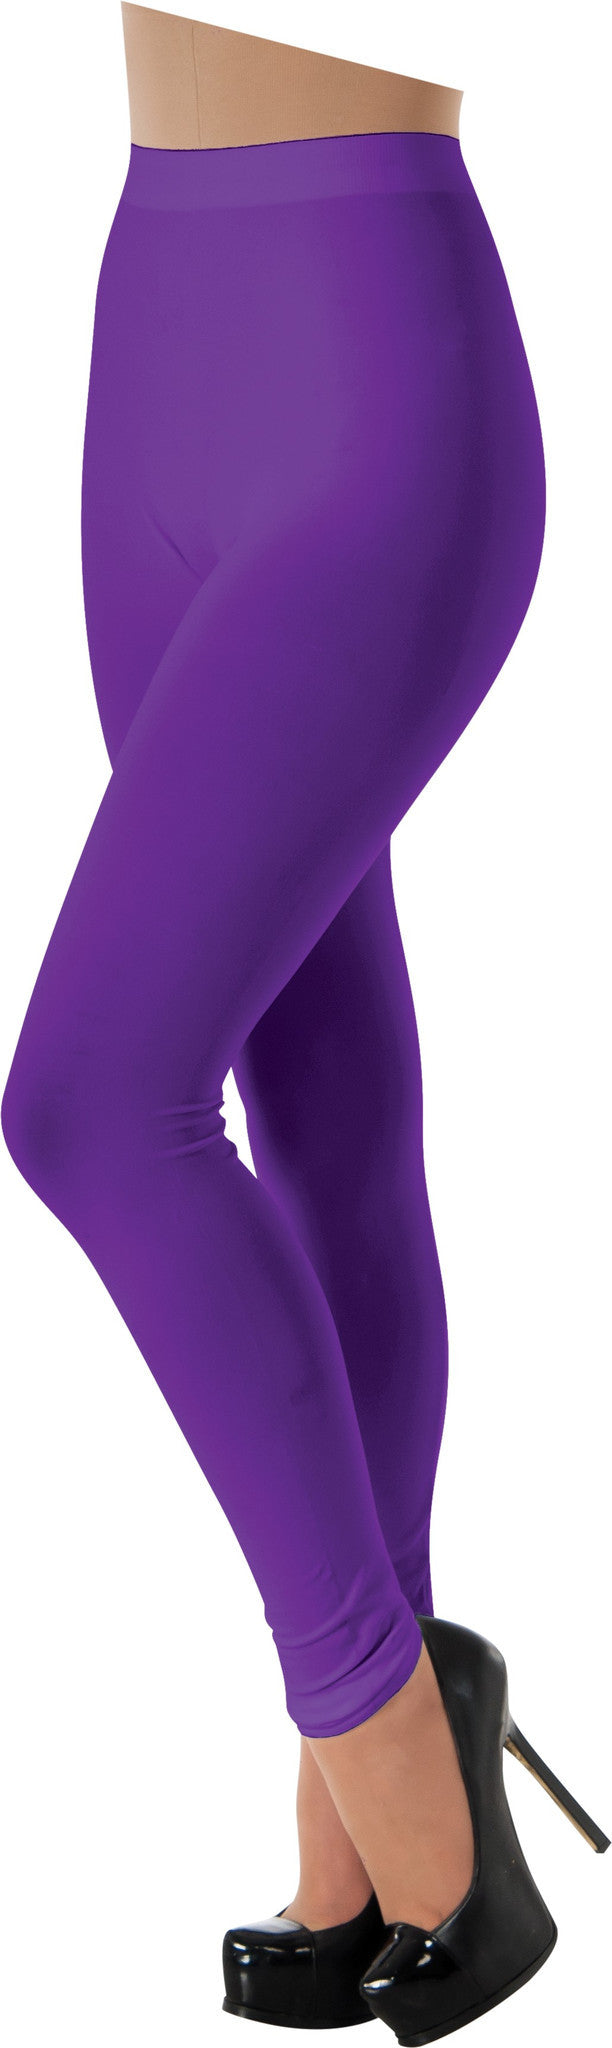 Adults Purple Leggings - Halloween Costumes 4U - Accessories